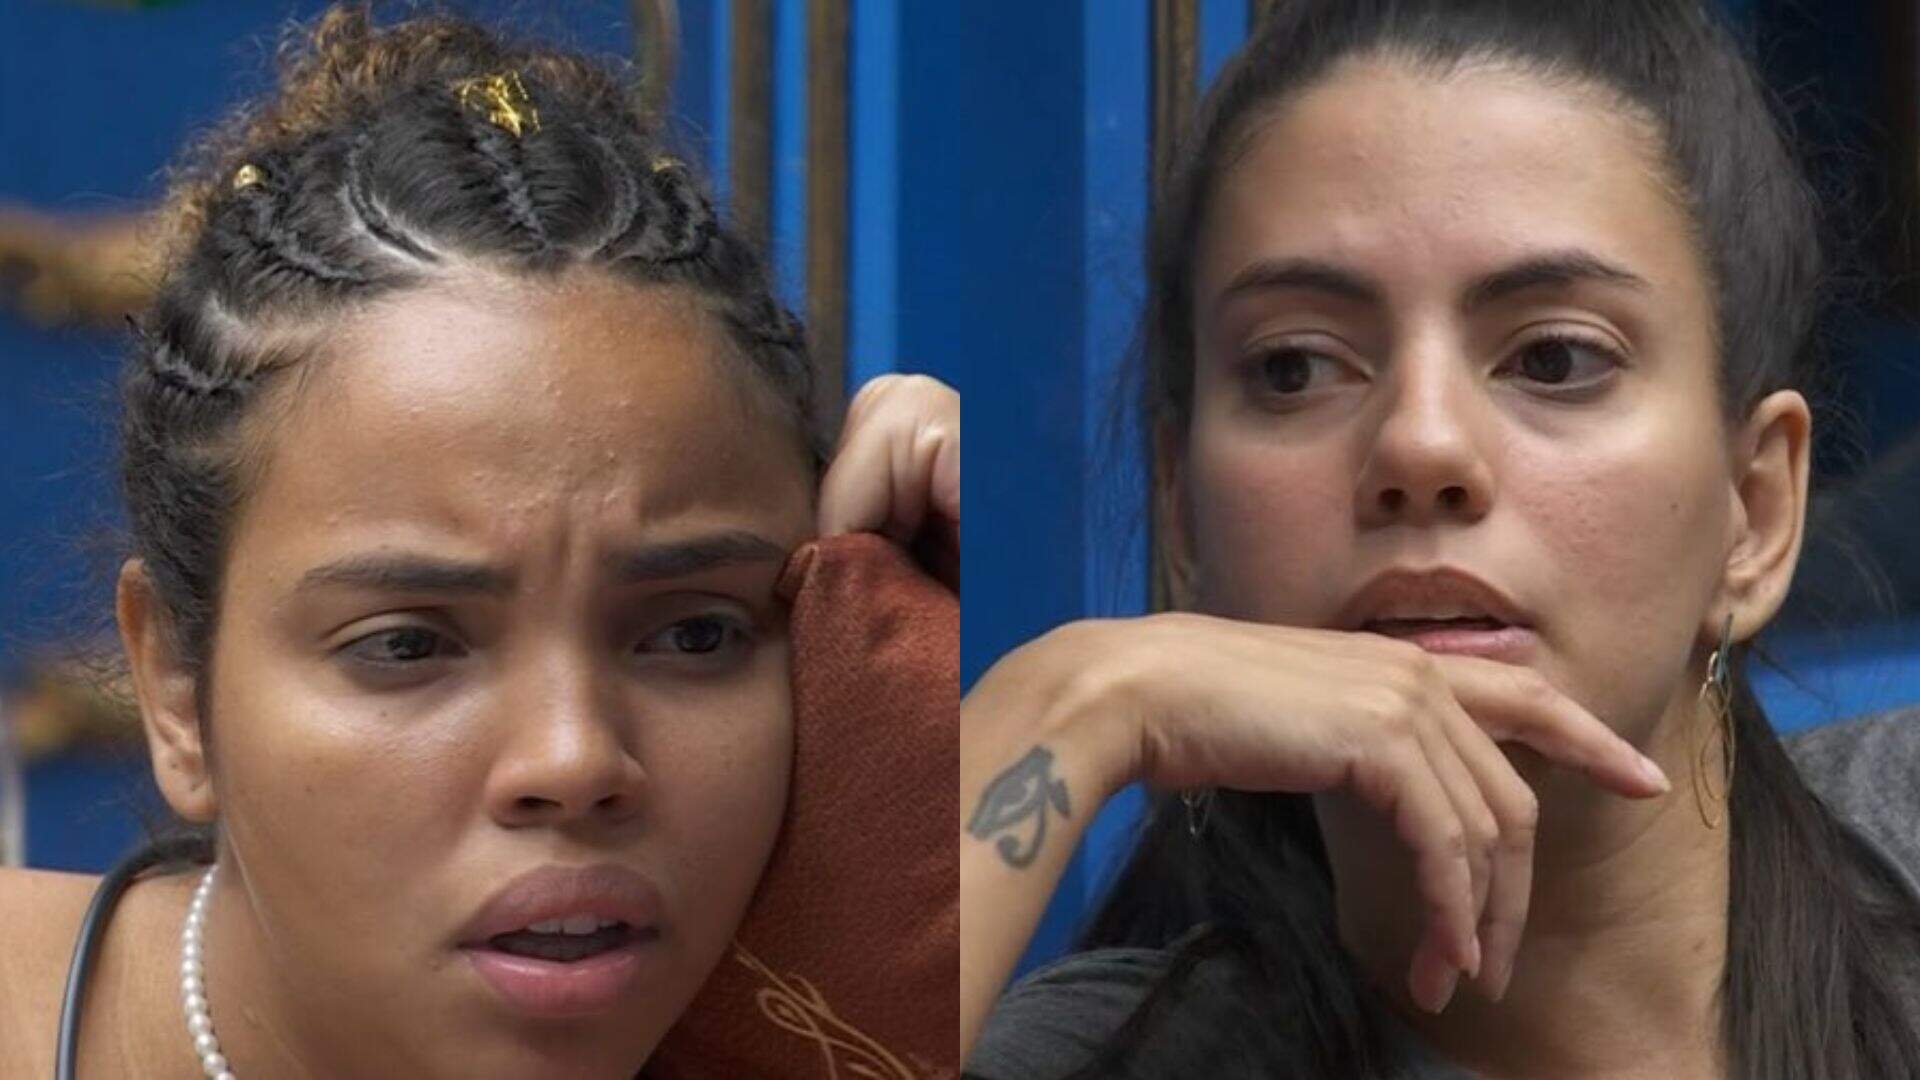 BBB 24: Giovanna Pitel e Fernanda opinam sobre atitude de MC Bin Laden: “Leva e traz” - Metropolitana FM